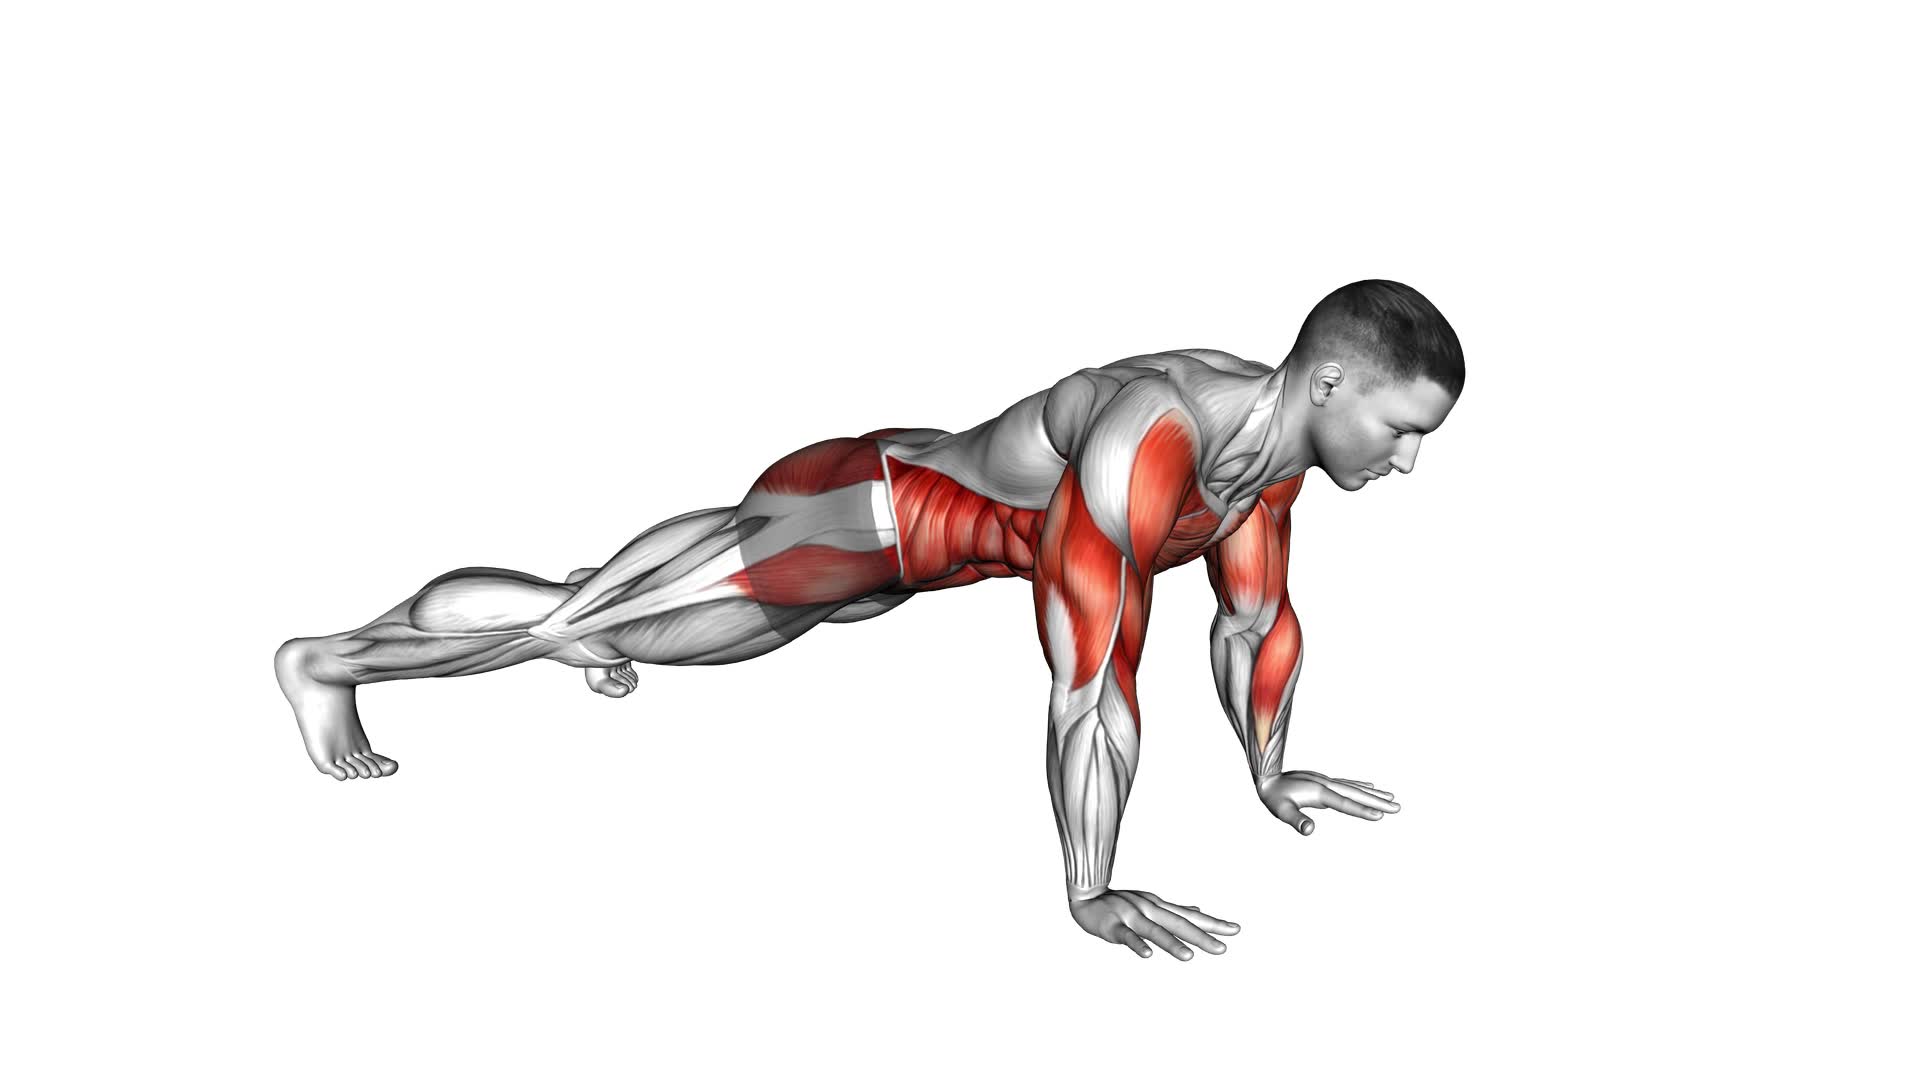 Shoulder Tap Jack Plank (male) - Video Exercise Guide & Tips